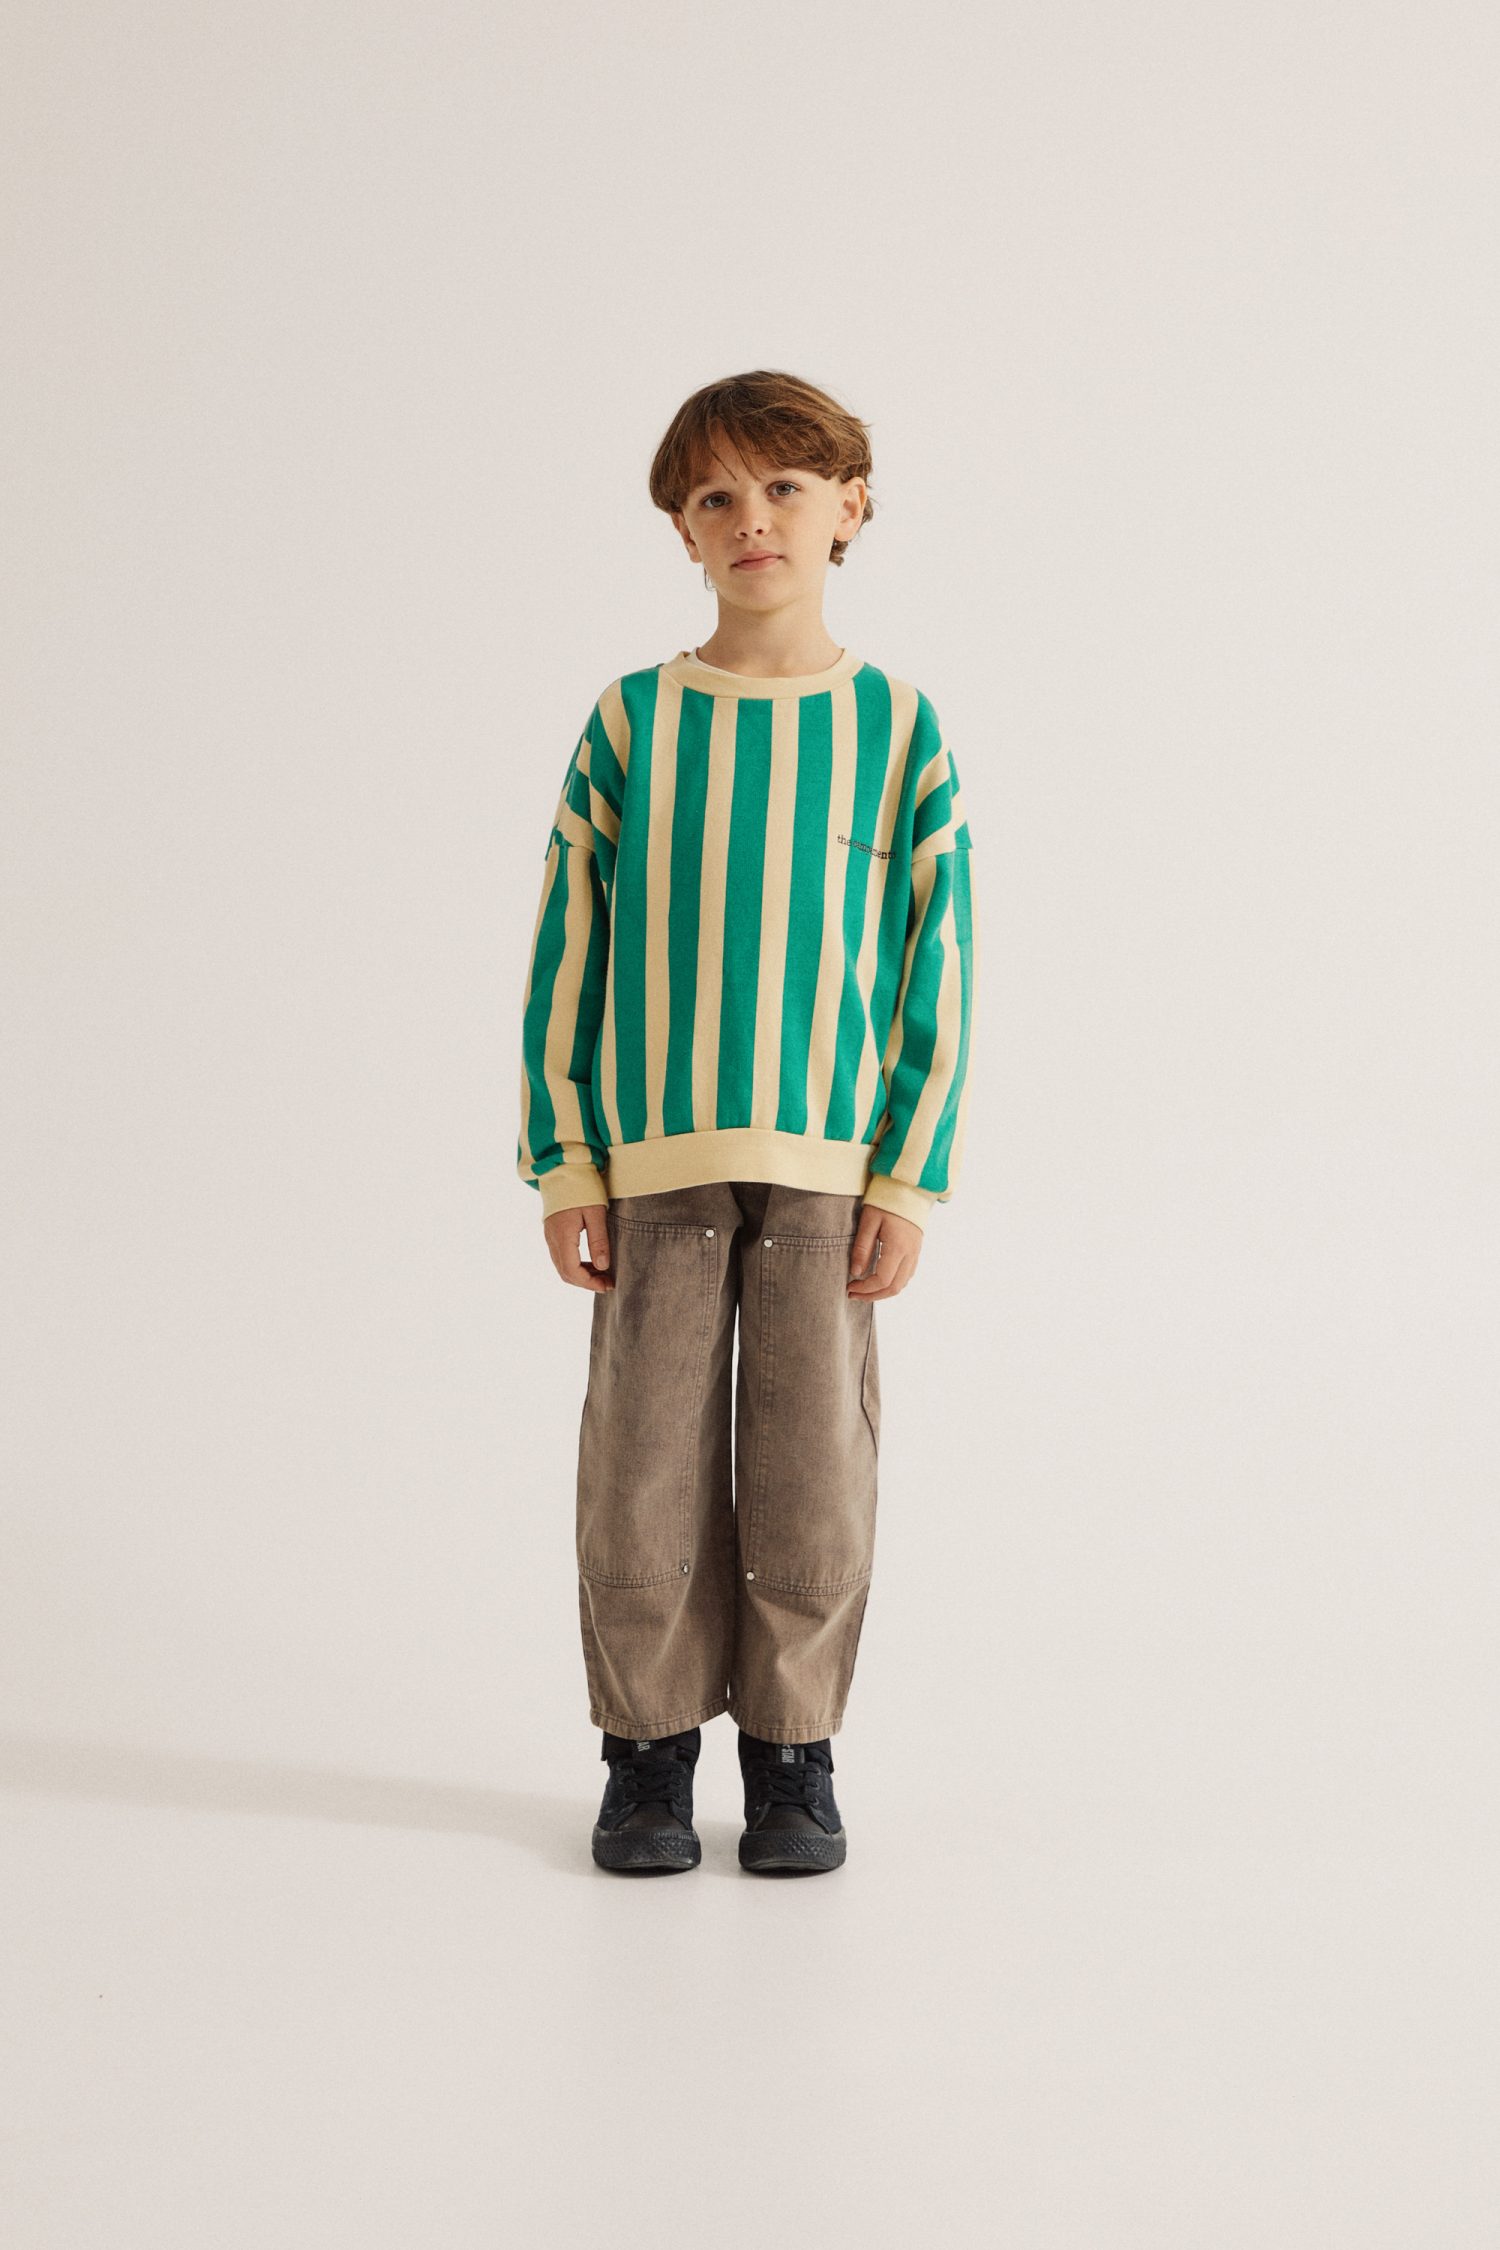 Buy Green Stripes Oversized Kids Sweatshirt Online - The Campamento